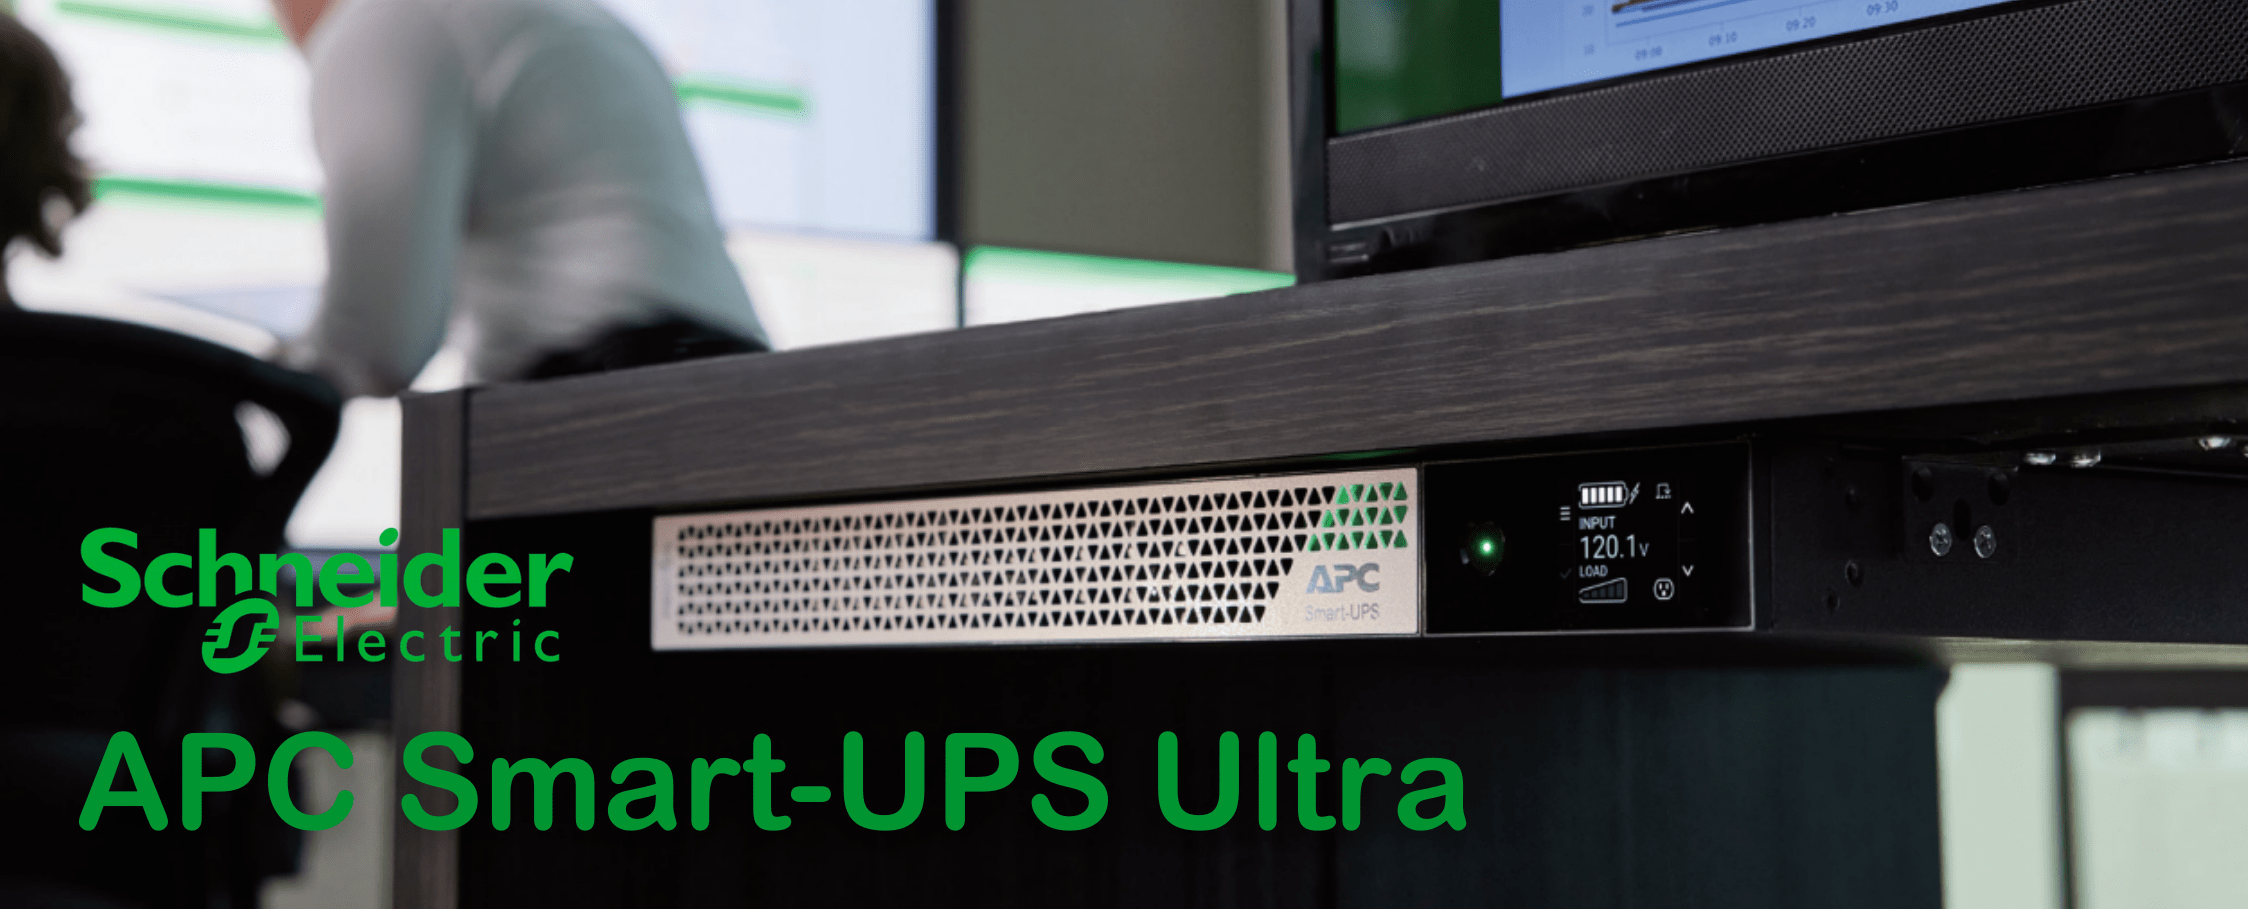 APC Smart-UPS Ultra header image